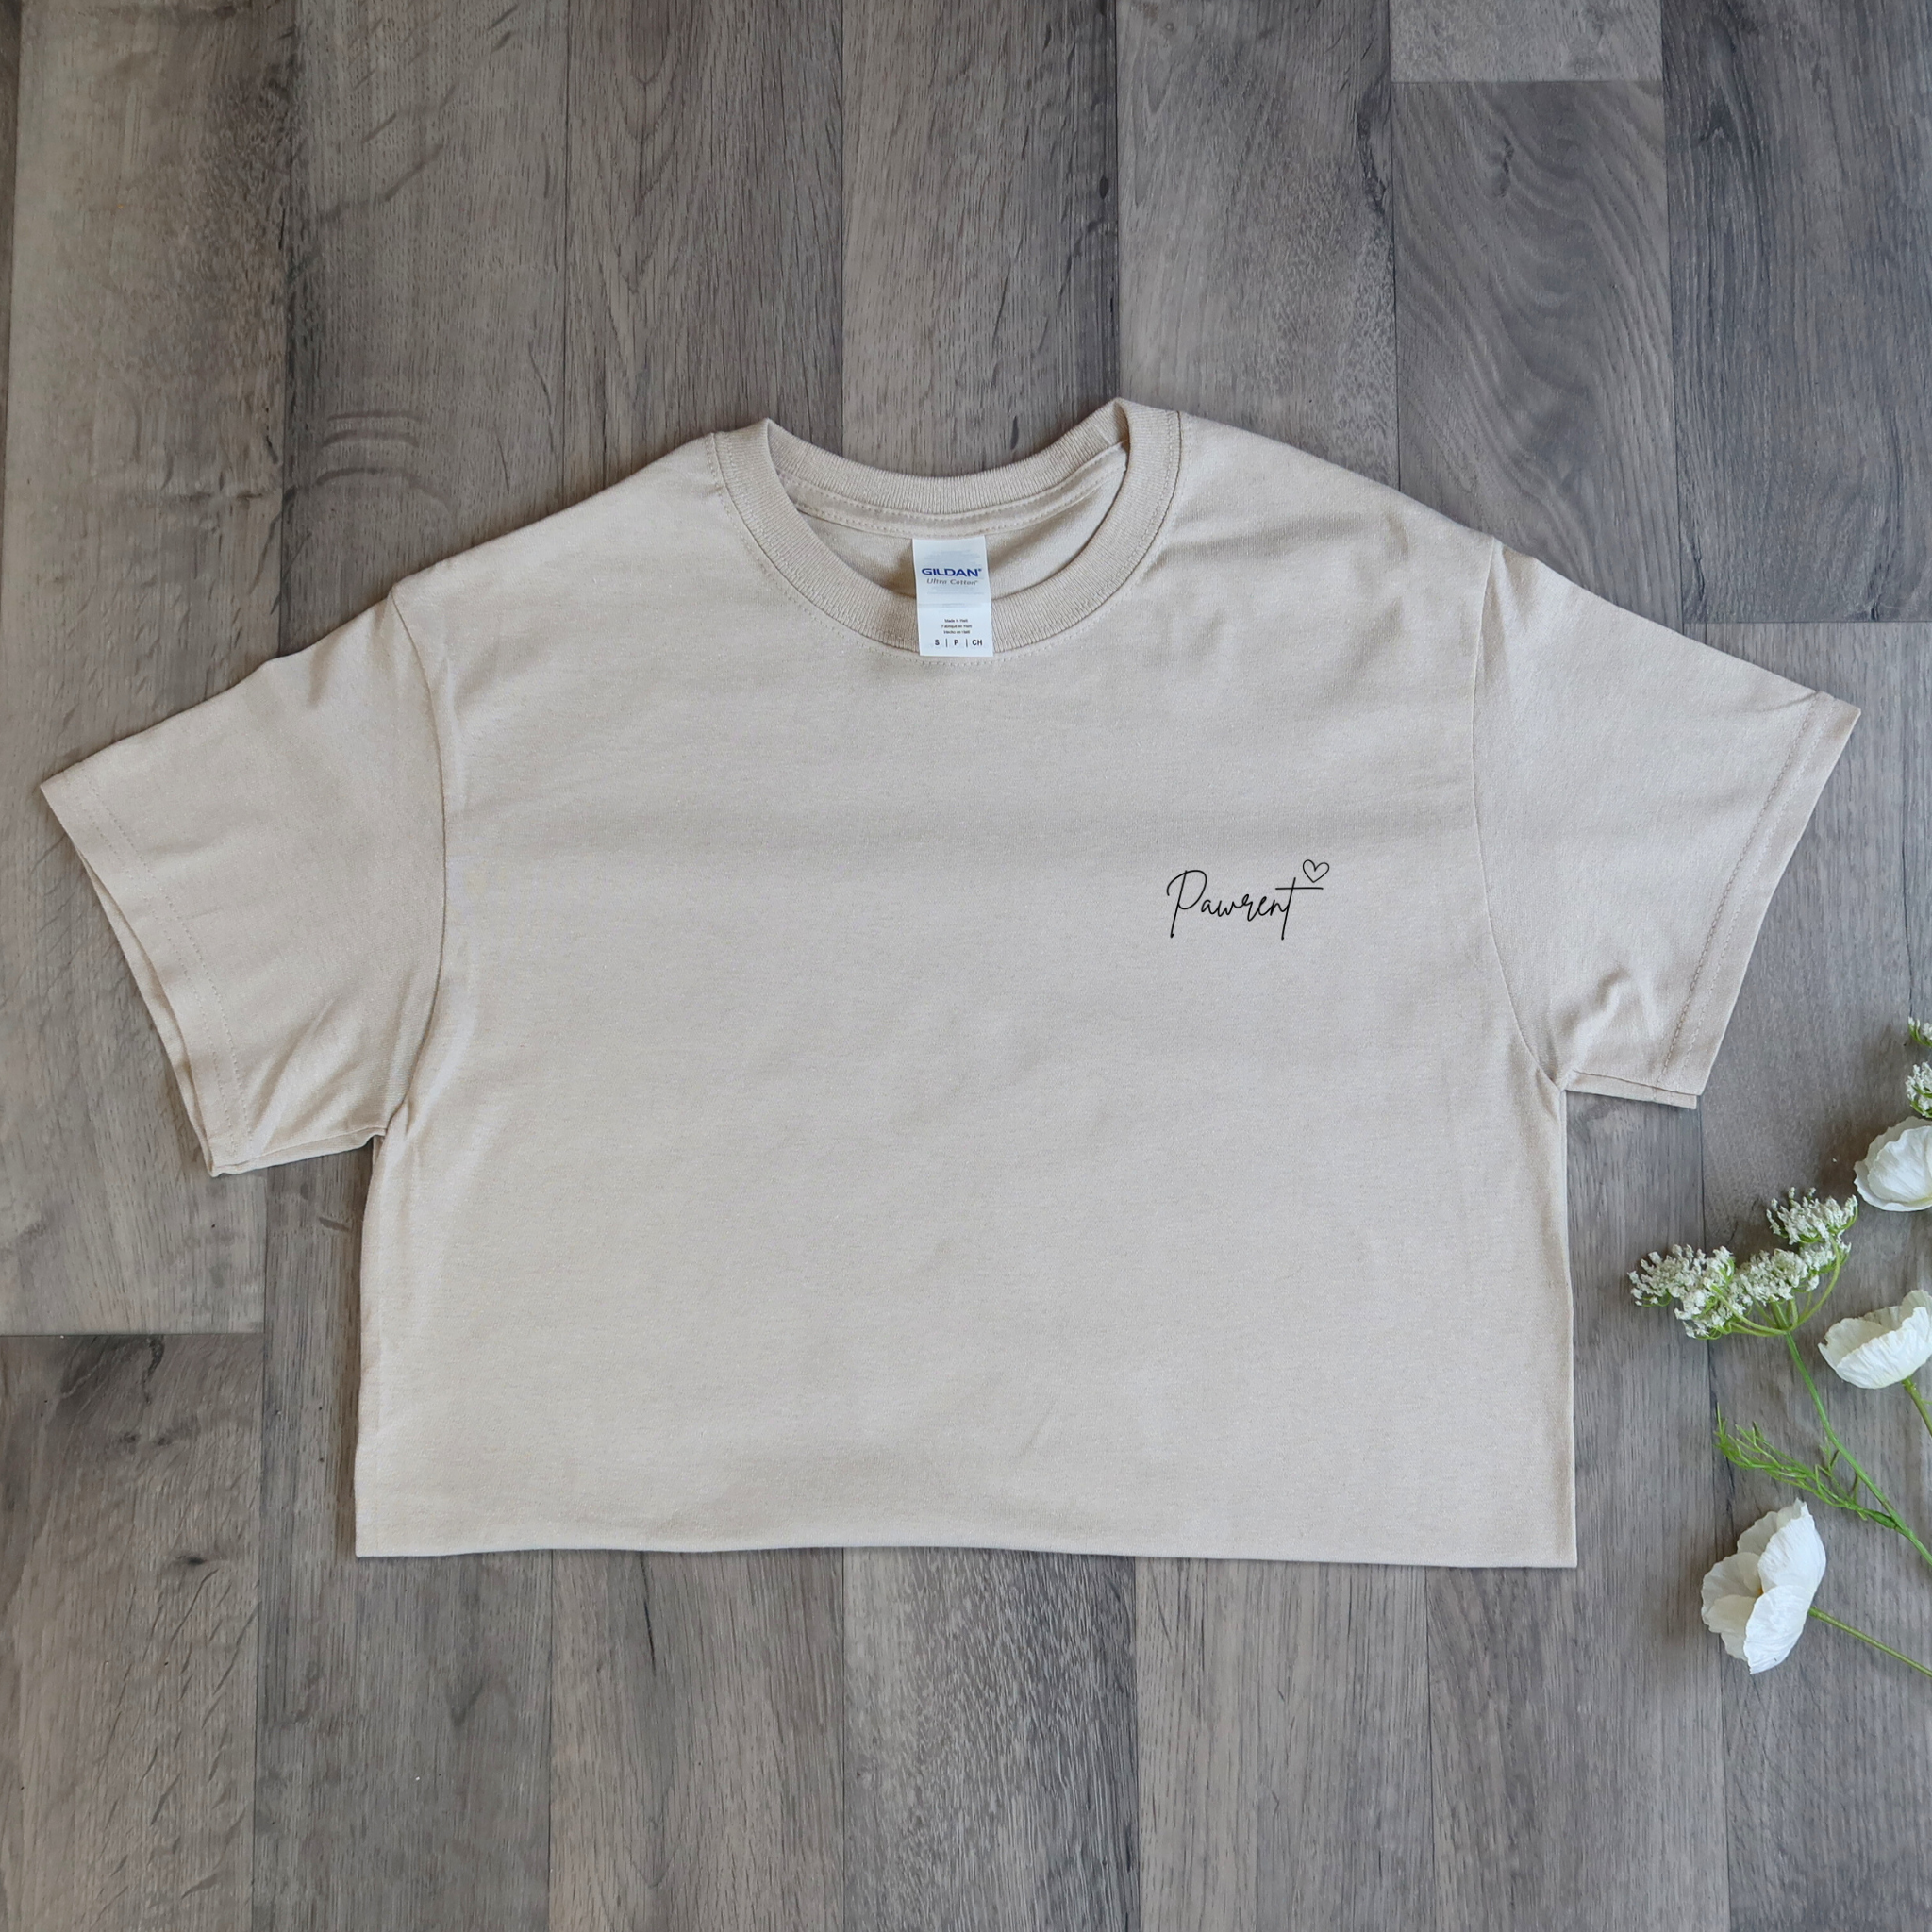 'Pawrent' t-shirt